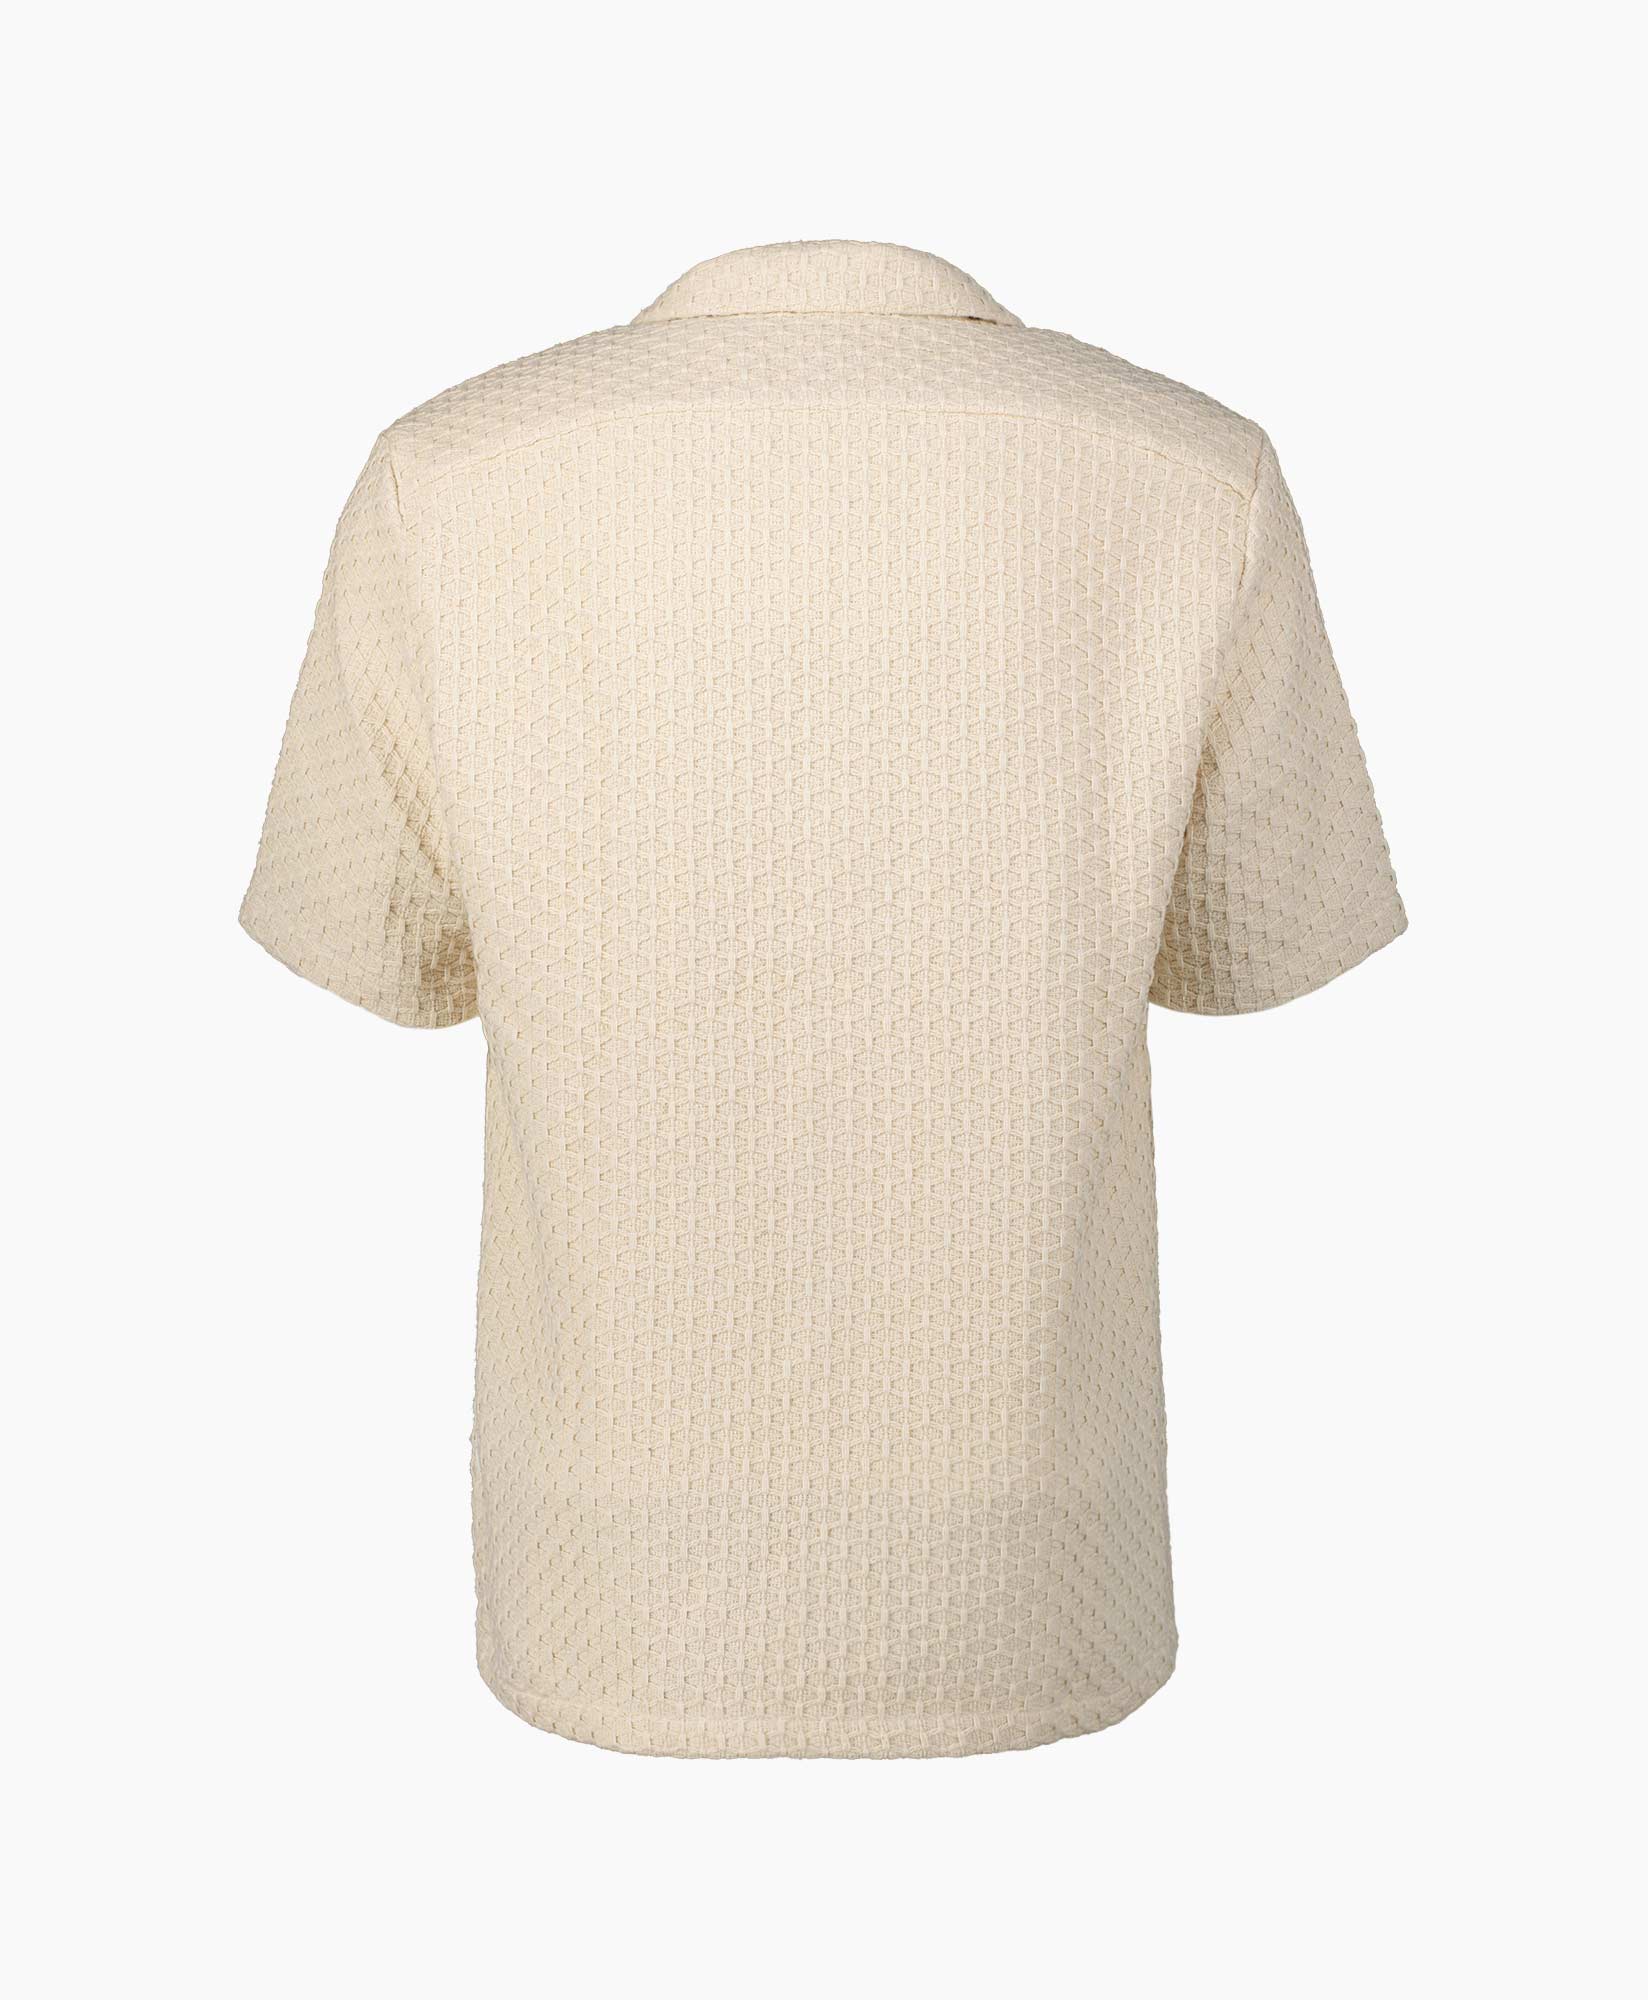 Overhemd Jacquard Croche Off White